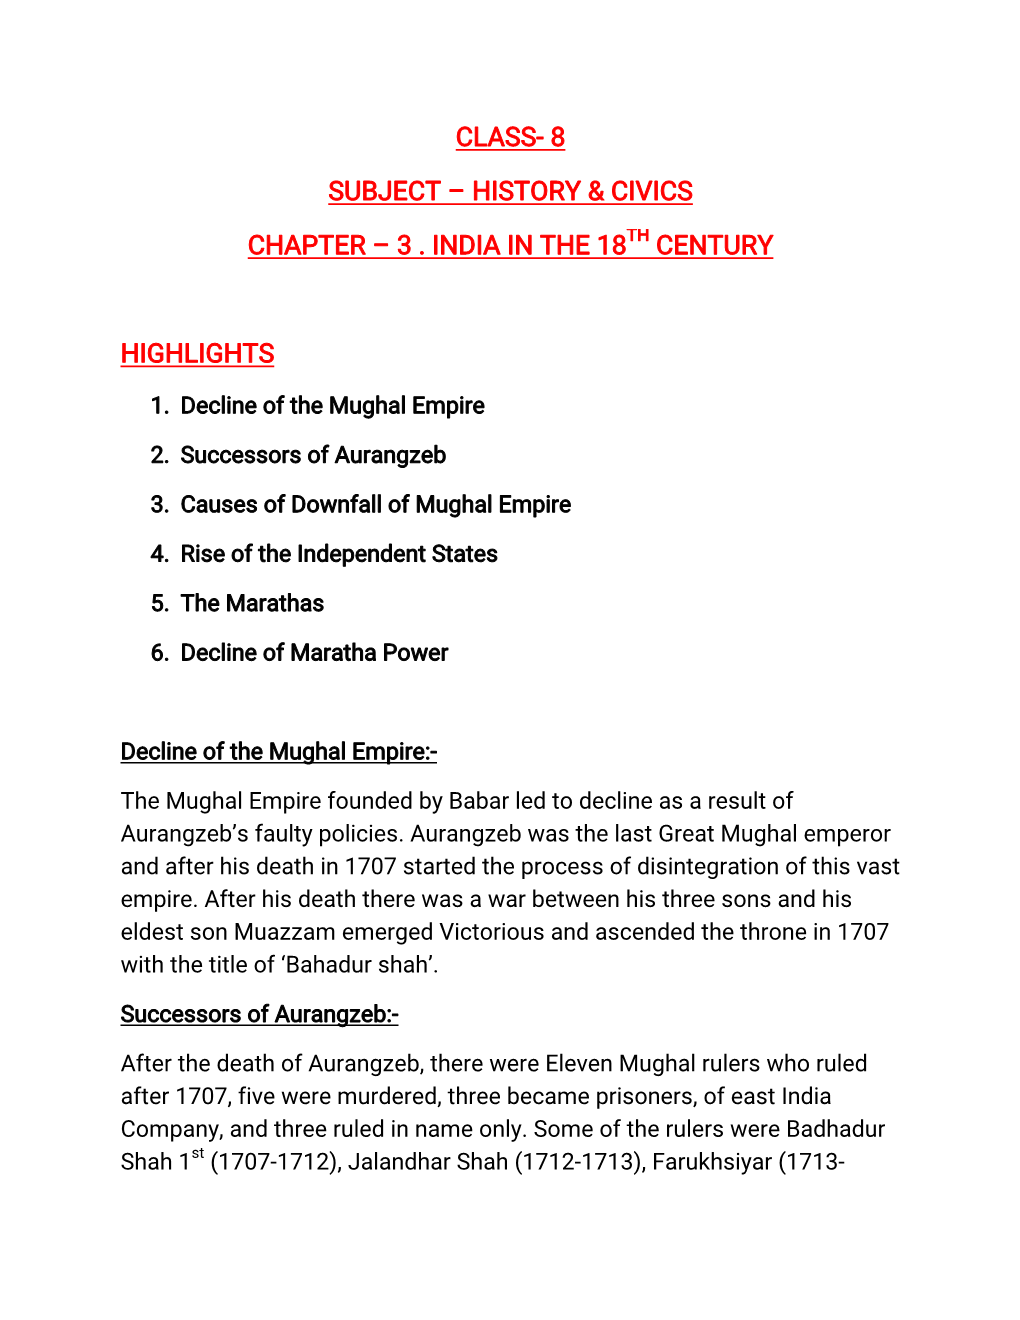 Class-8 Subject–History&Civics Chapter–3